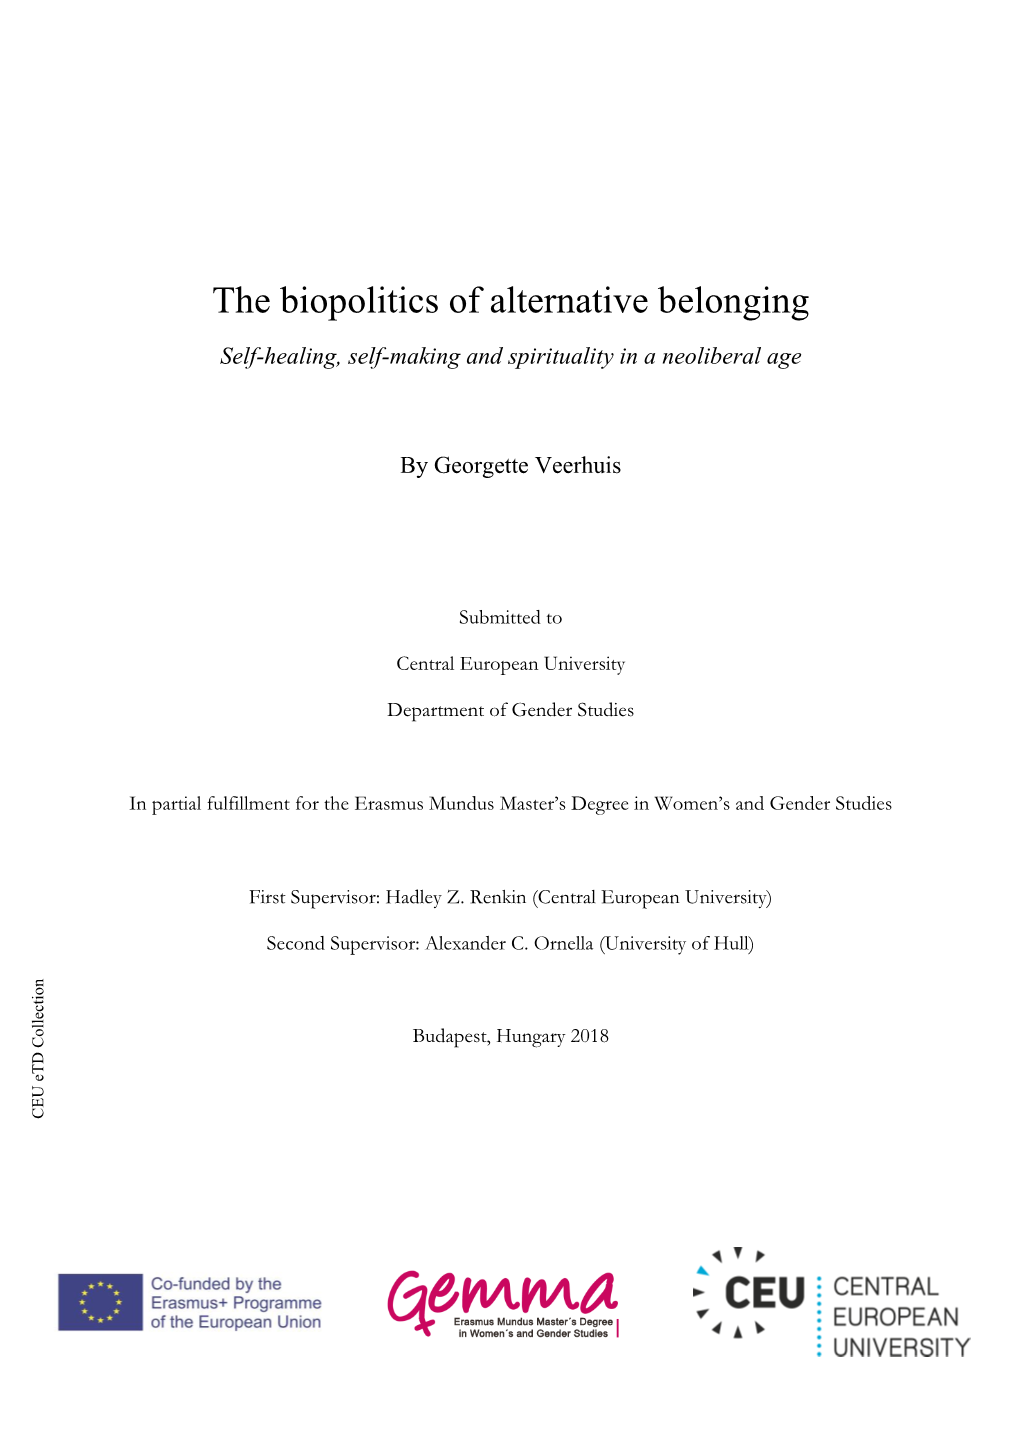 The Biopolitics of Alternative Belonging